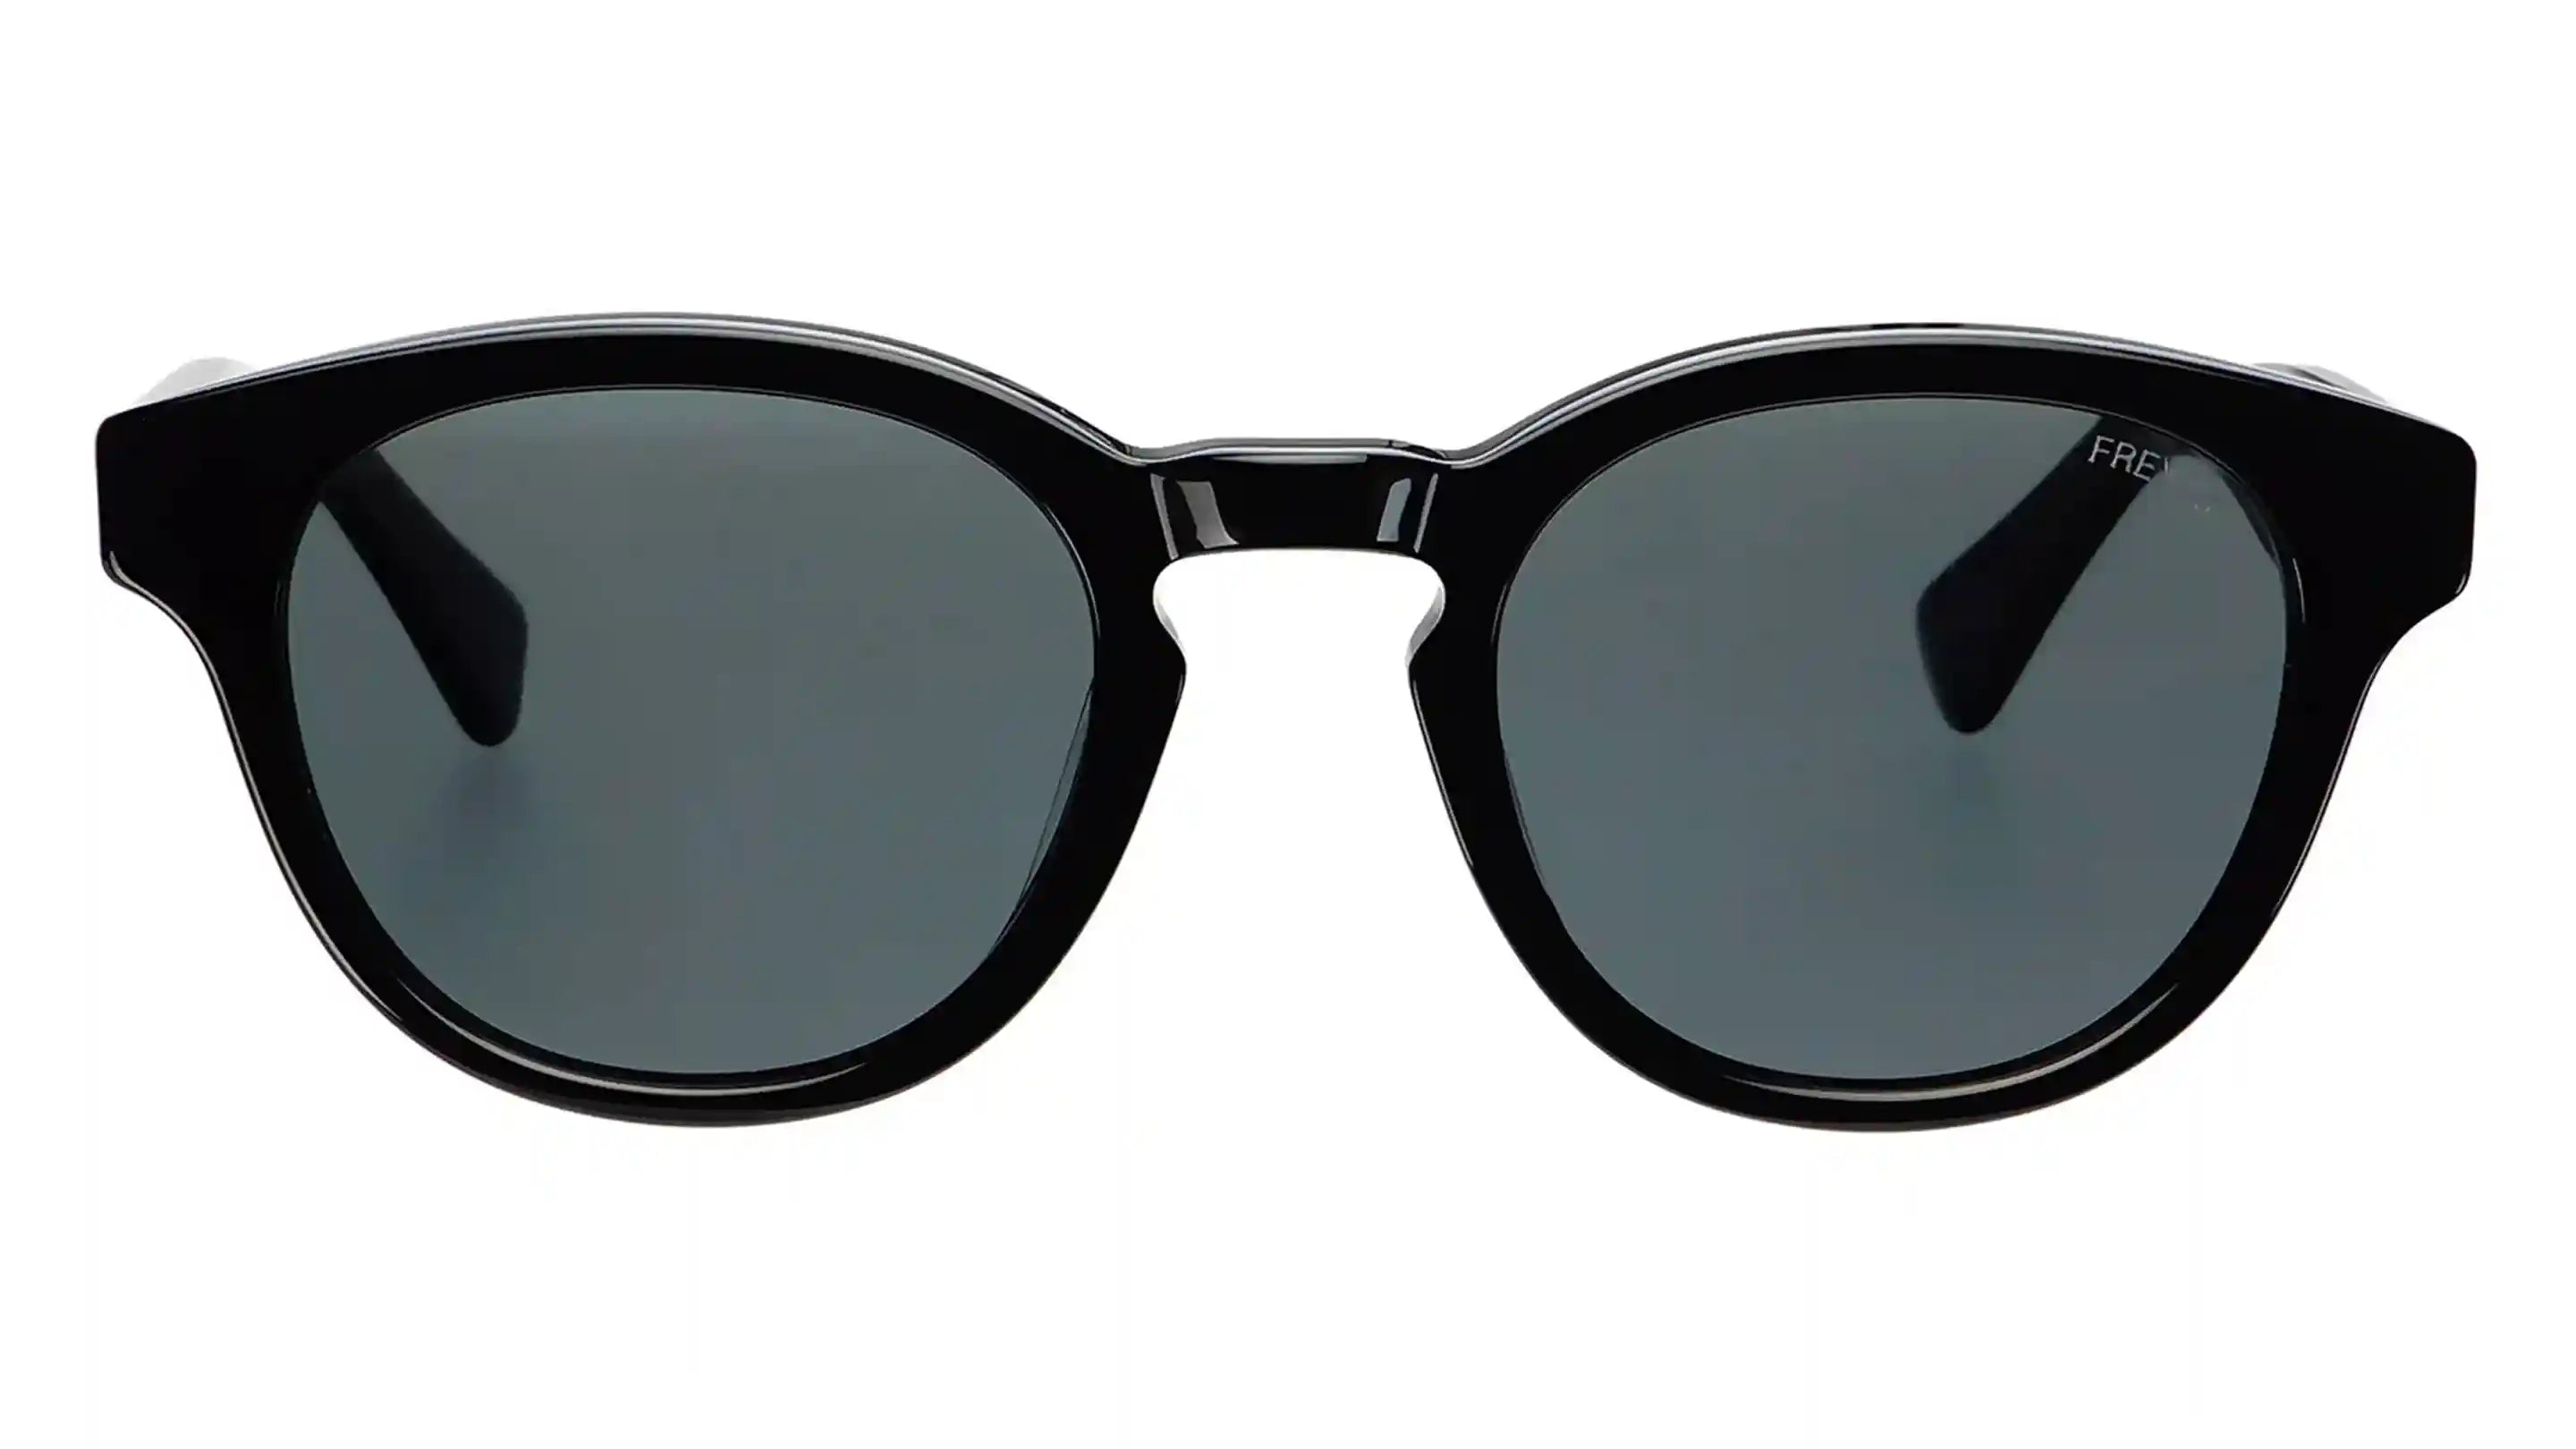 A pair of black sunglasses